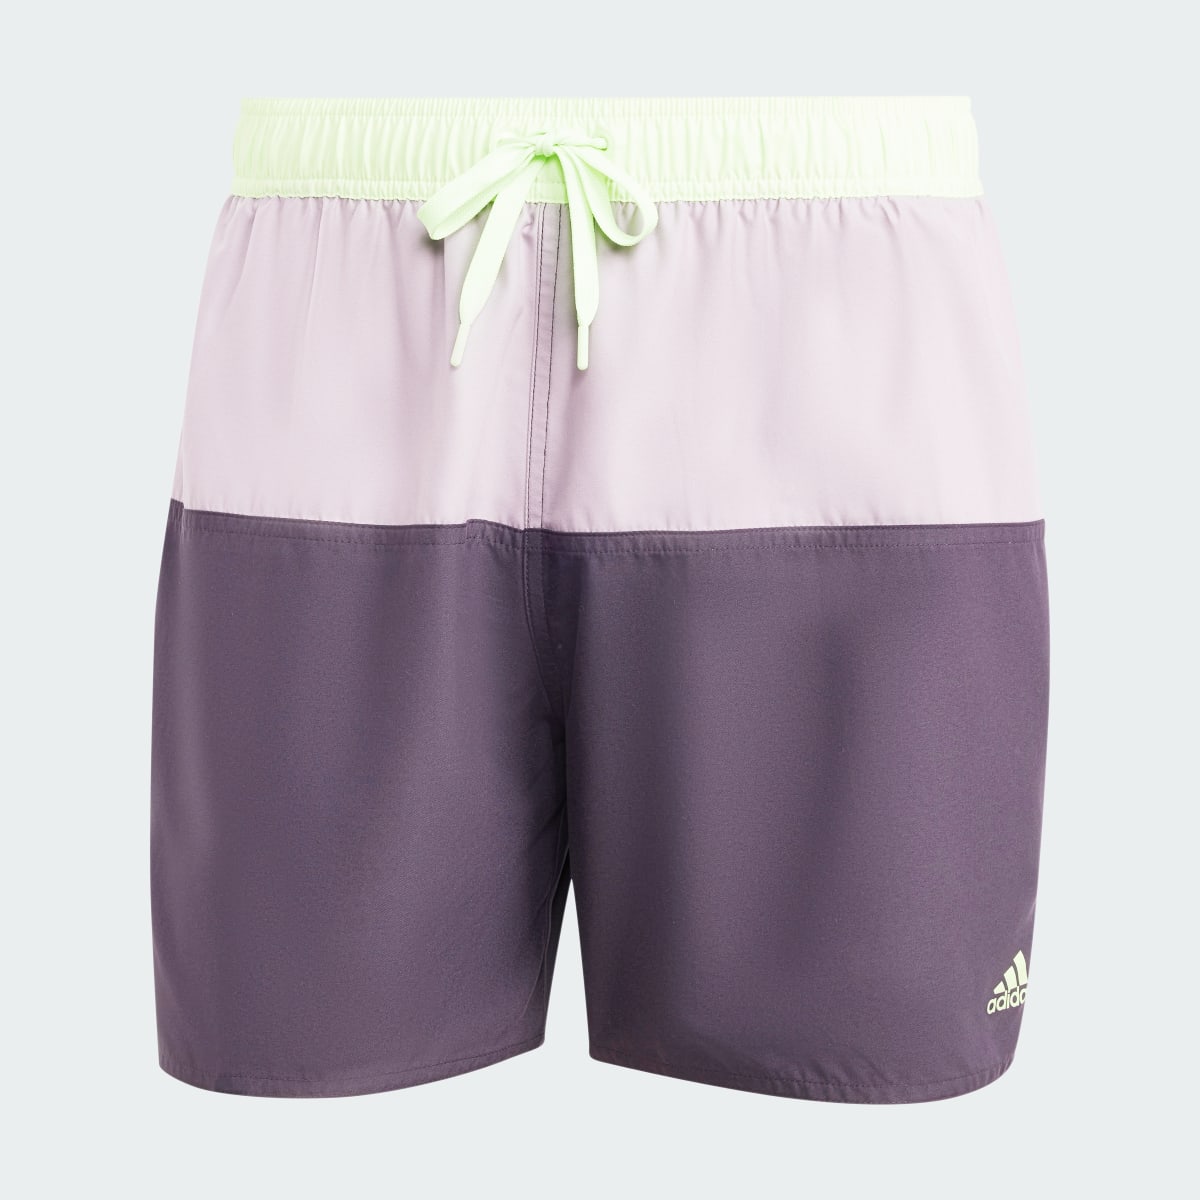 Adidas Colorblock CLX Swim Shorts Short Length. 4